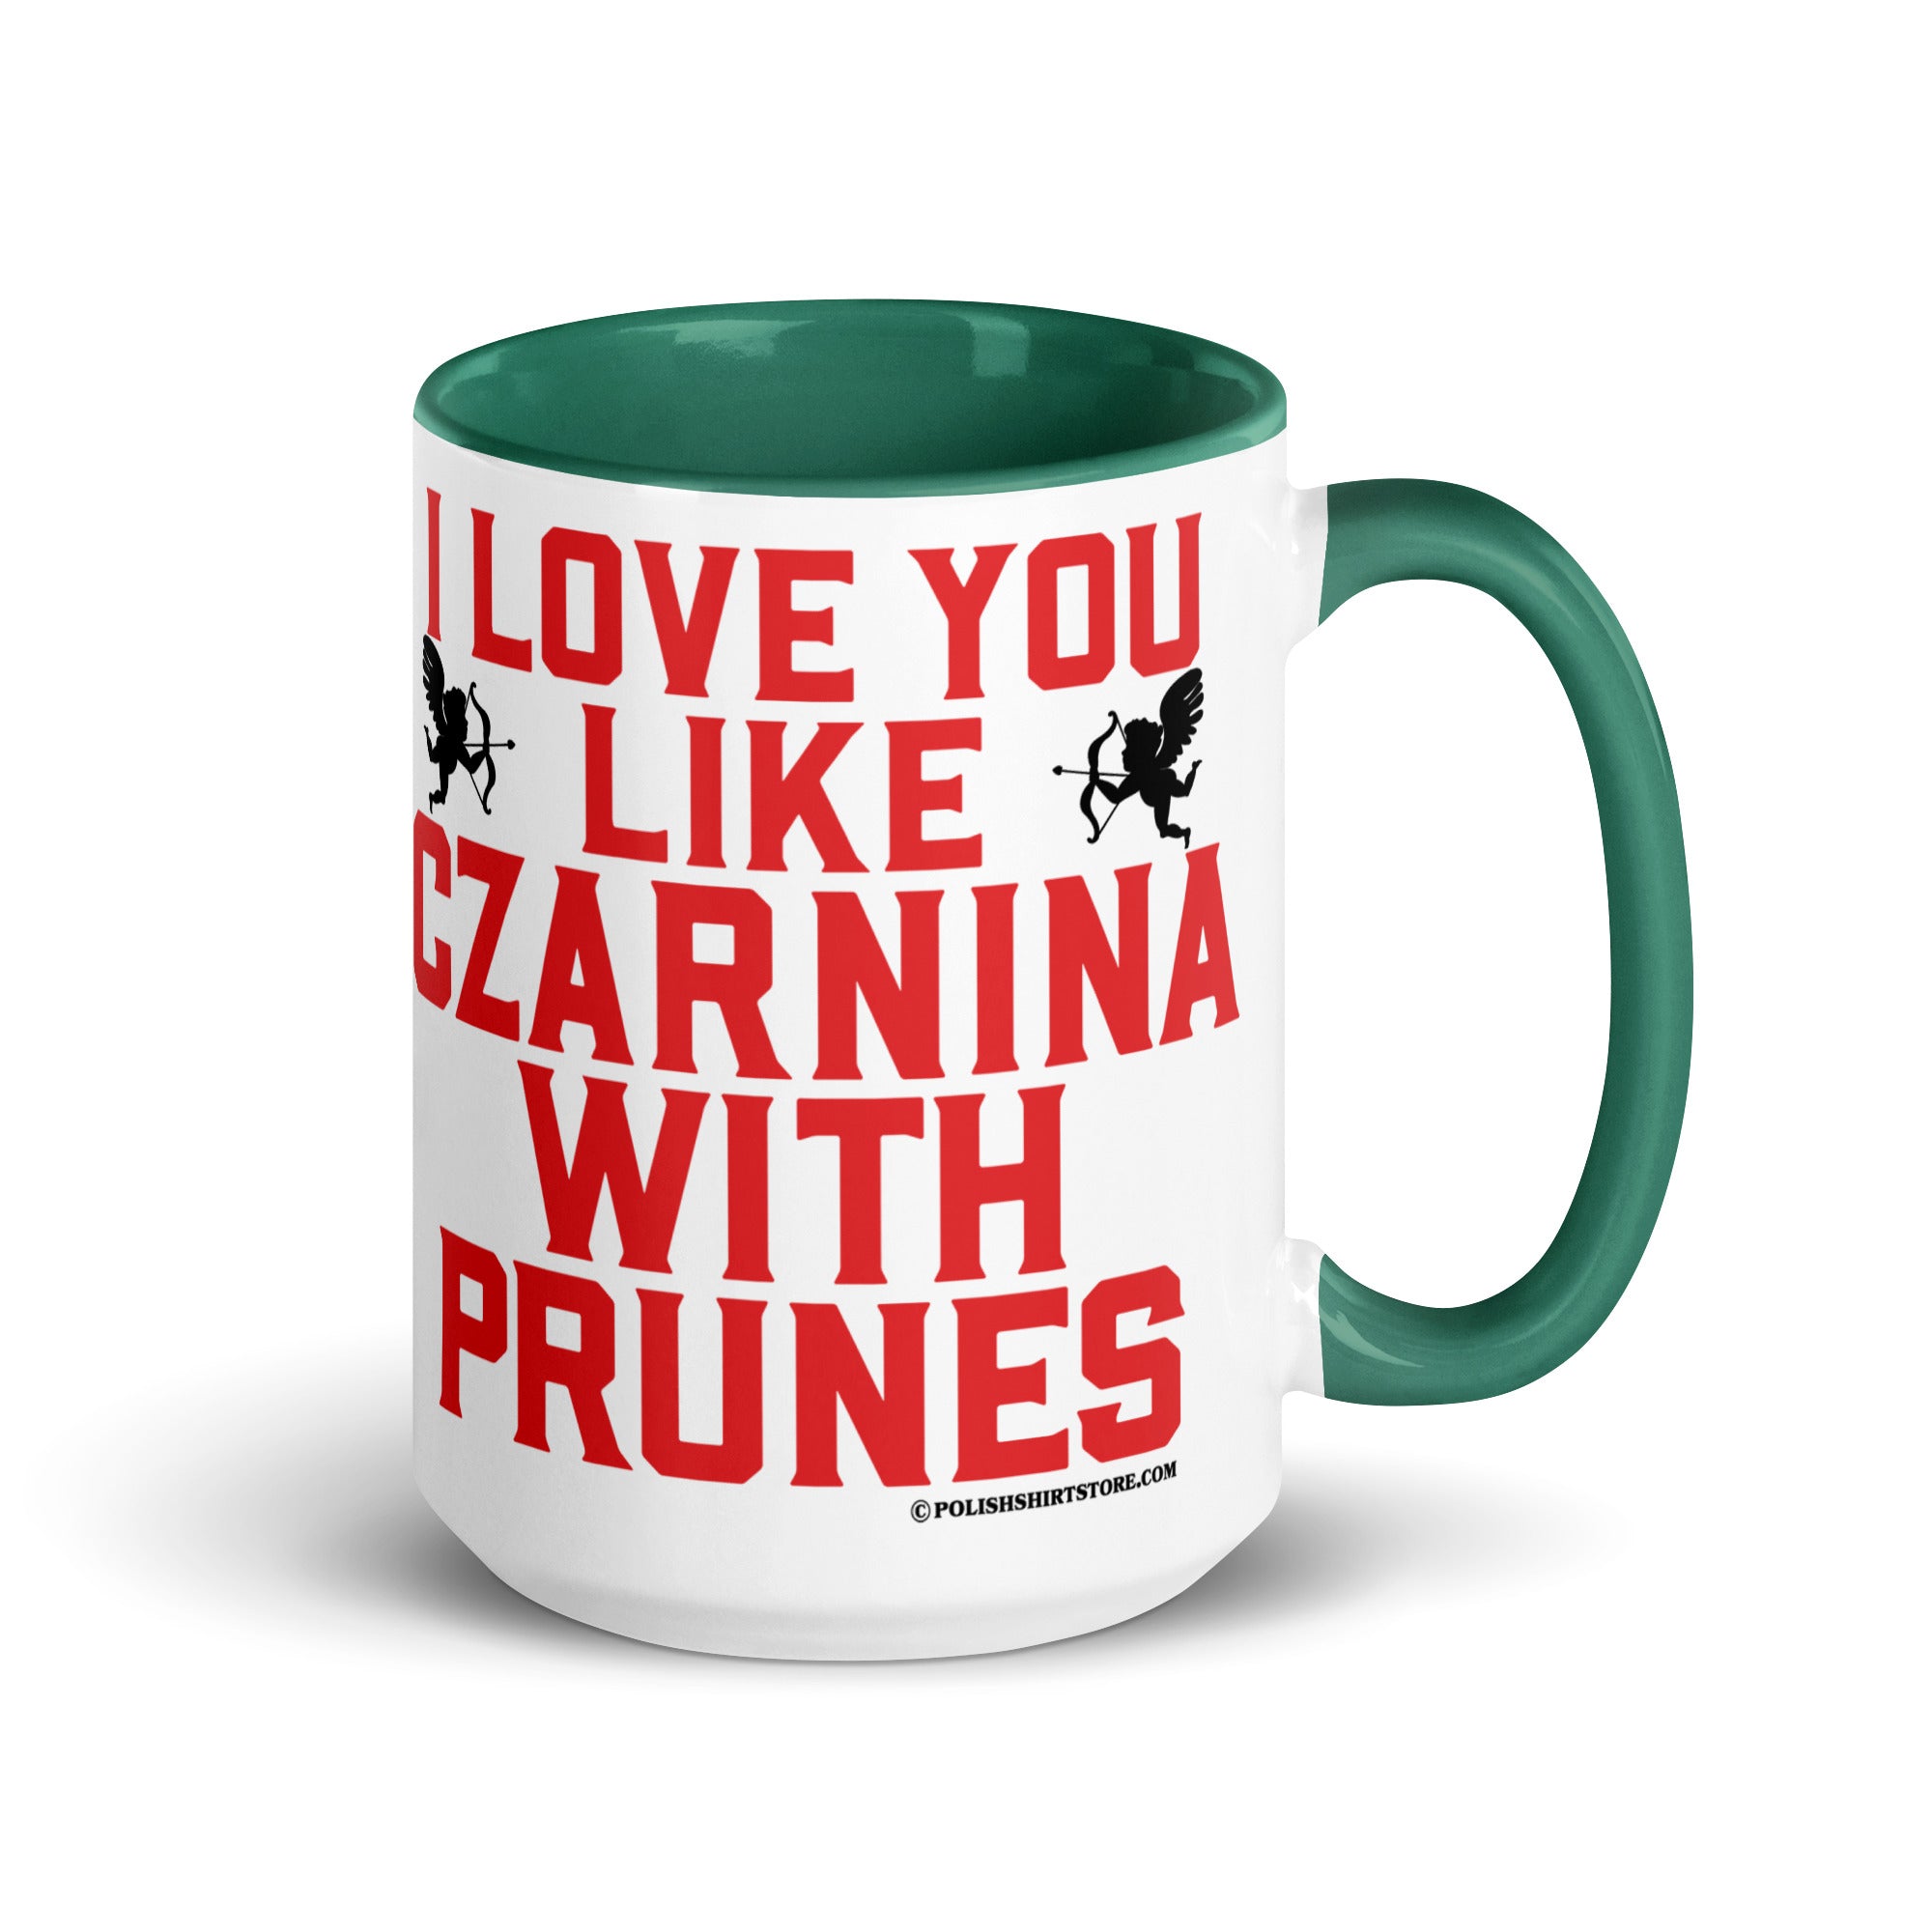 I Love You Like Czarnina With Prunes Coffee Mug with Color Inside  Polish Shirt Store Dark green 15 oz 